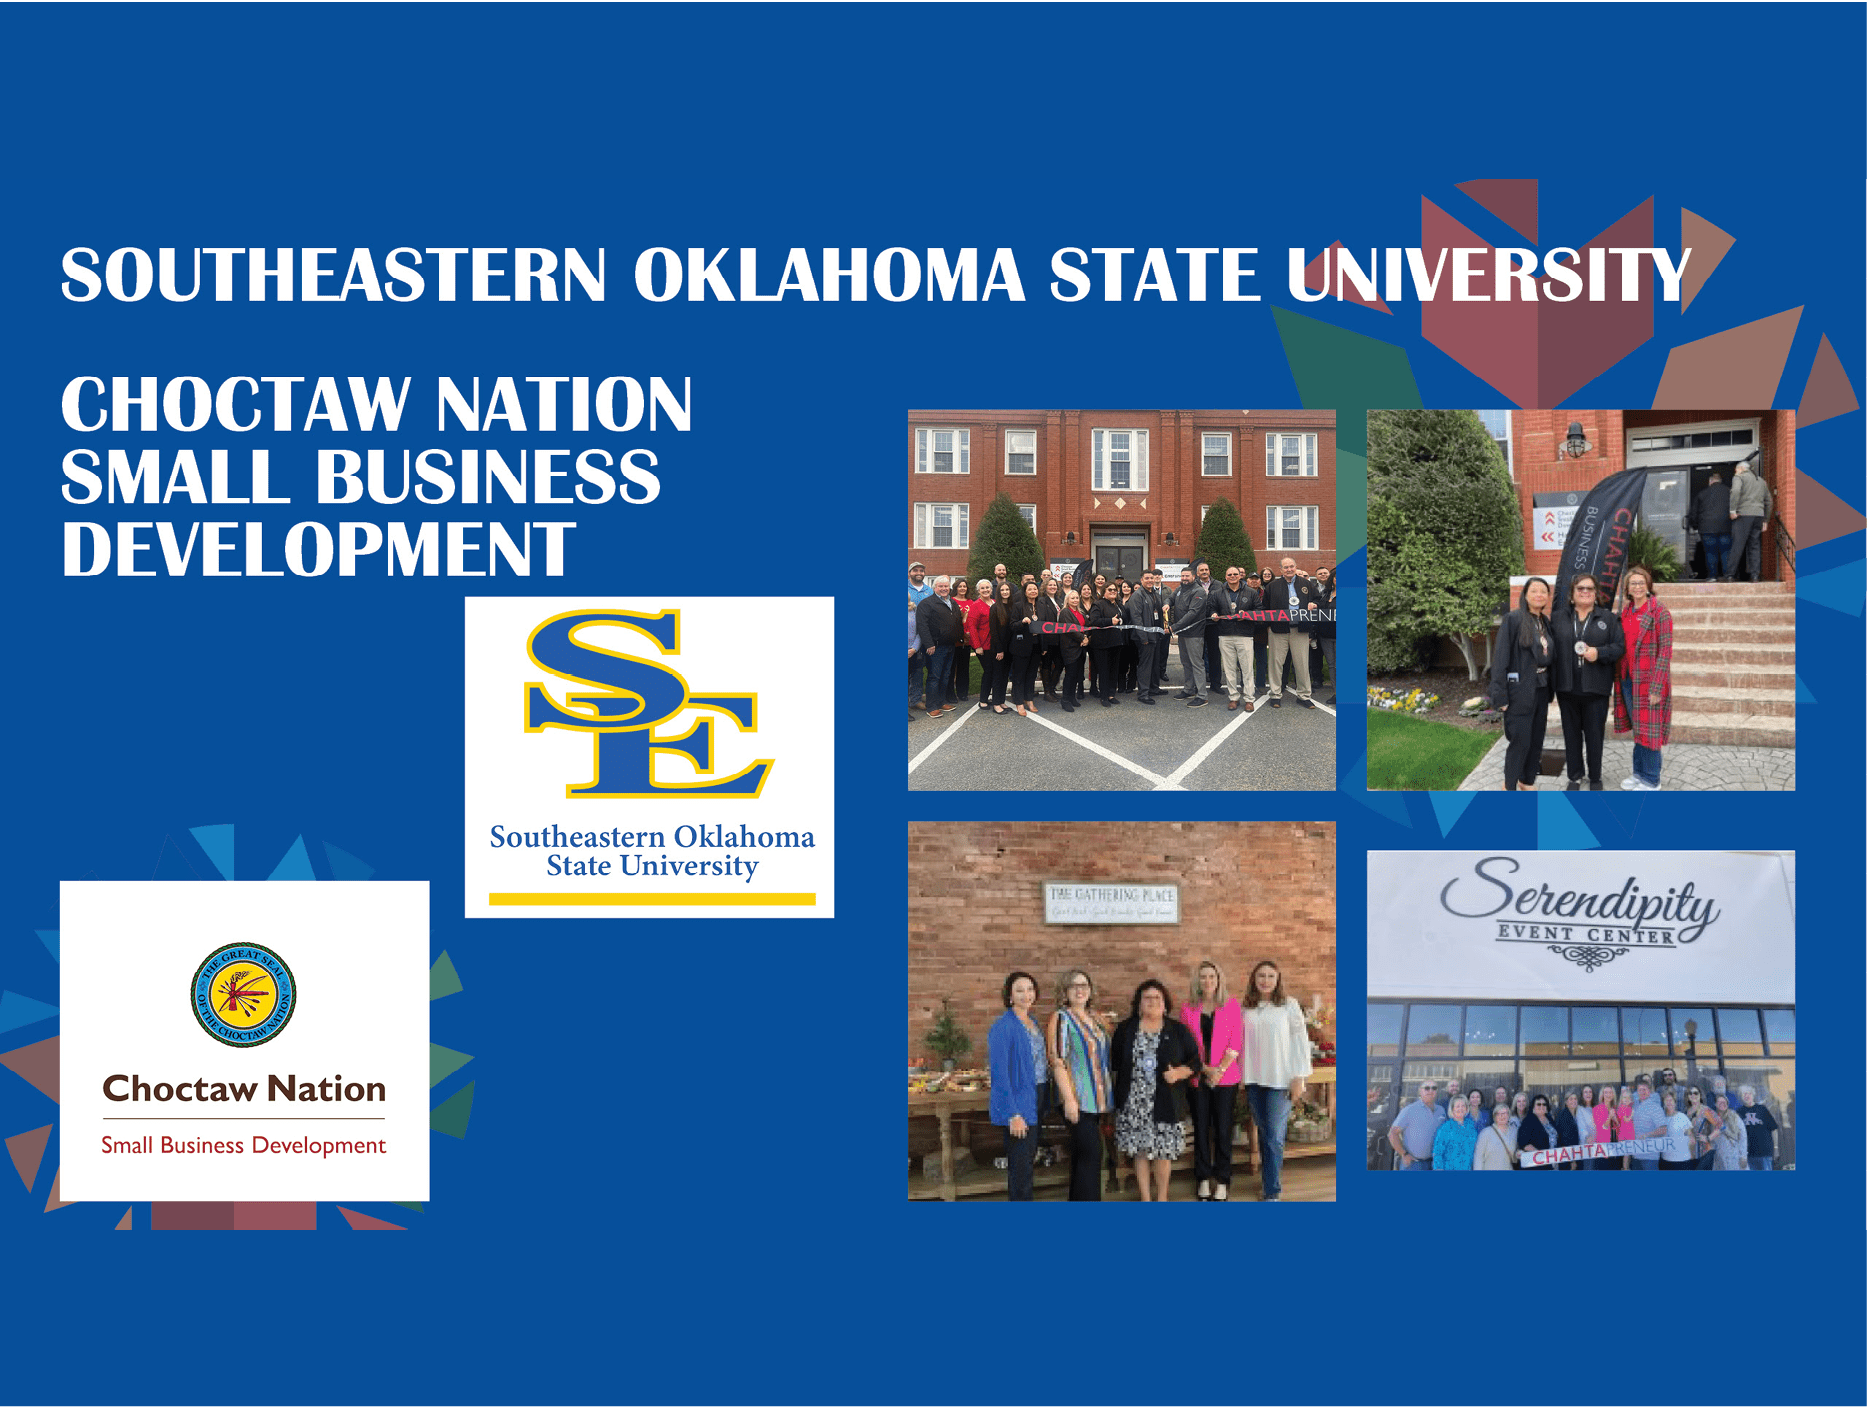 Southeastern Oklahoma State University and Choctaw Nation Small Business Development